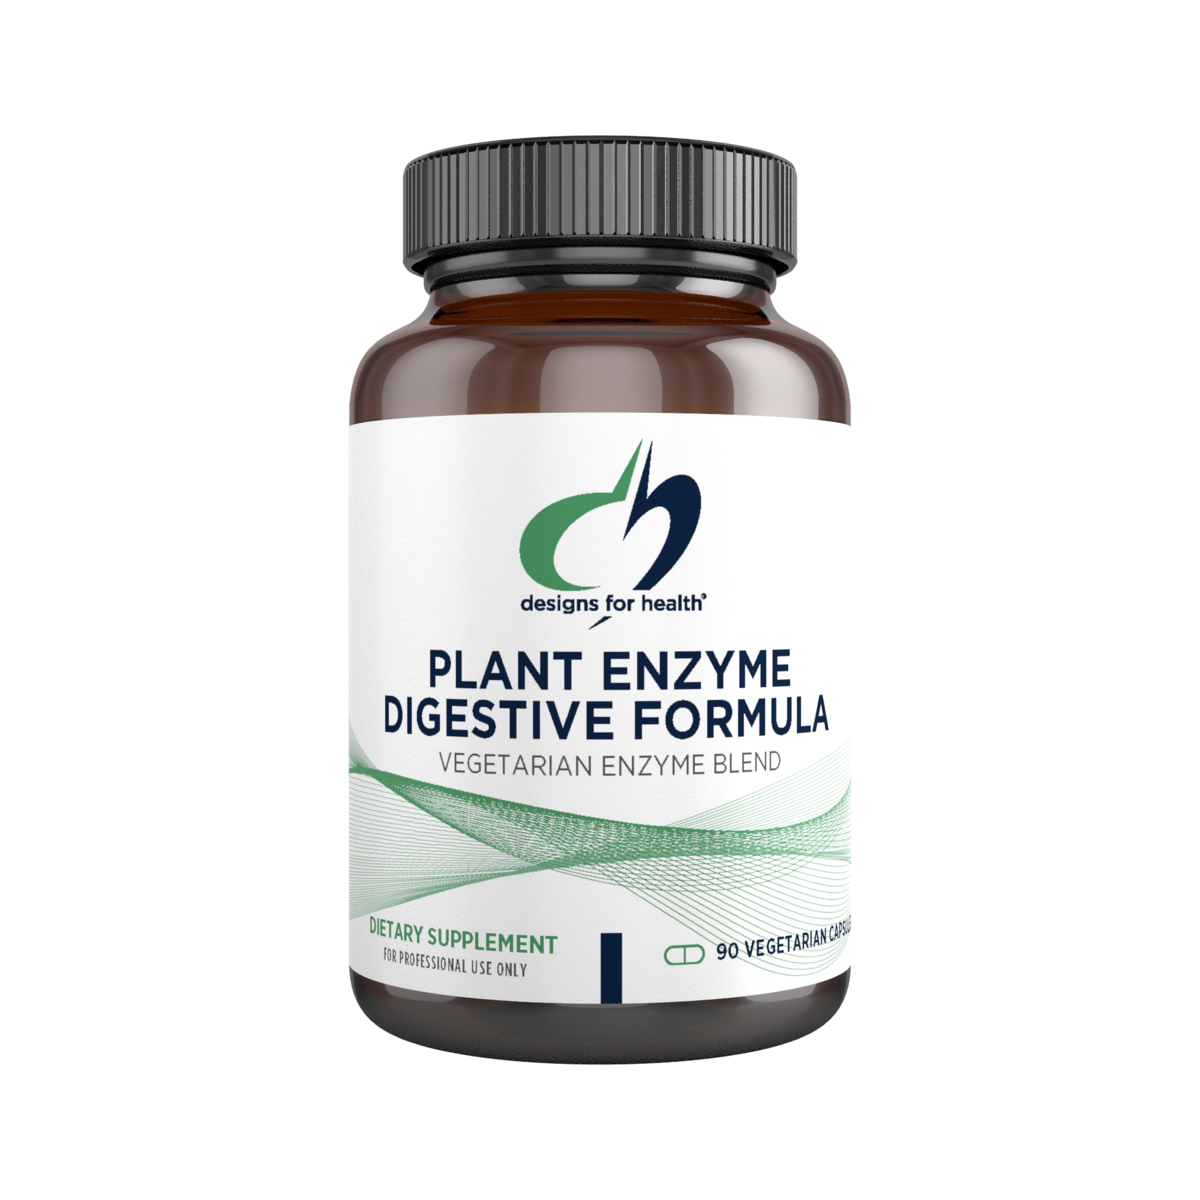 Plant enzyme digestive formula - 90 cápsulas